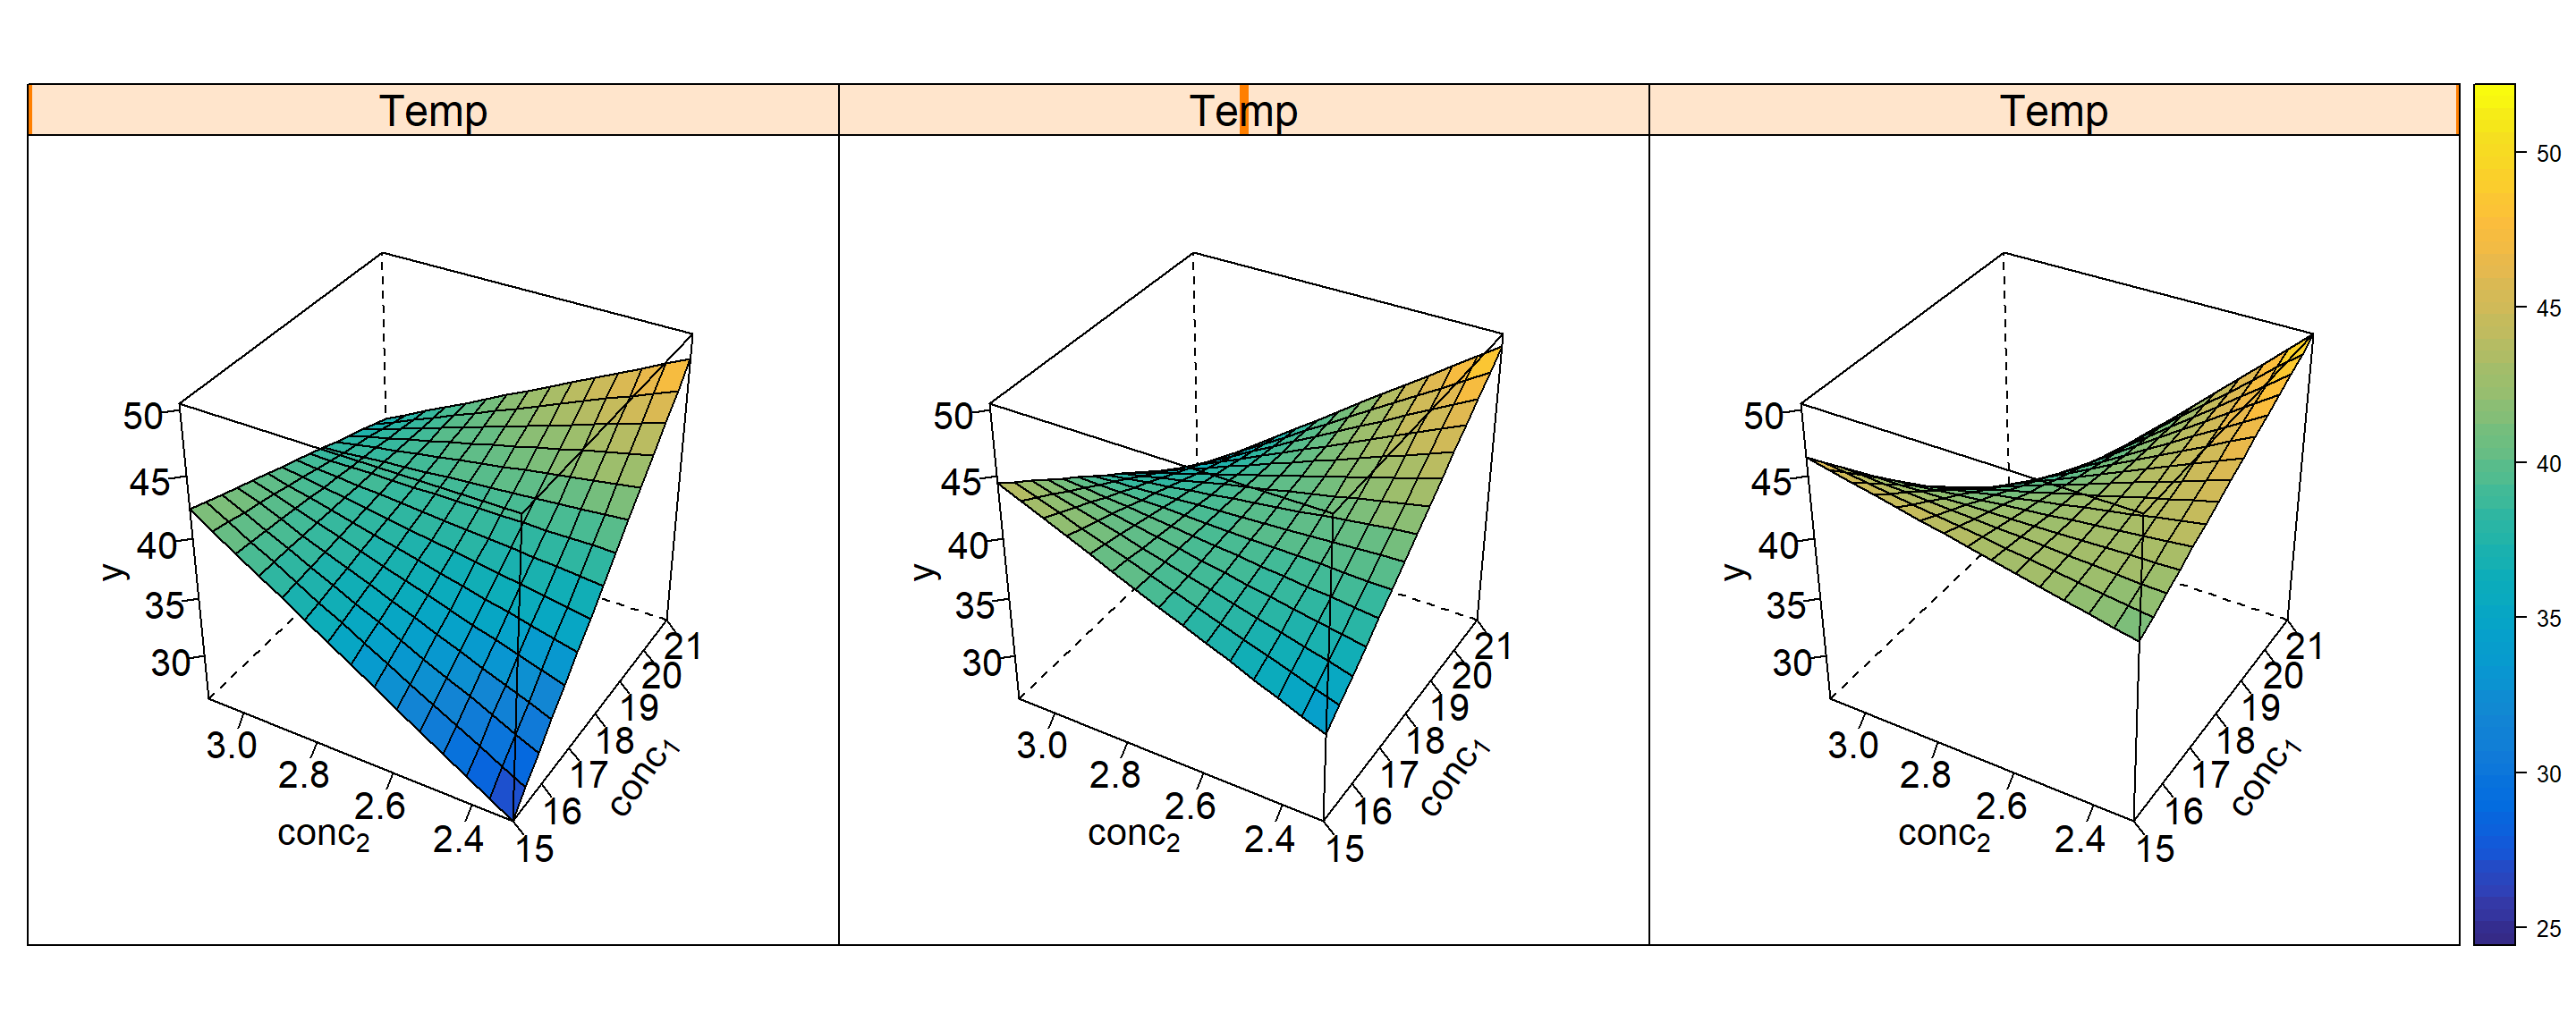 Response Surface trellis plot $\hat y=f(conc_{1},conc_{2},Temp)$ of factorial polymer elasticity $\hat y$